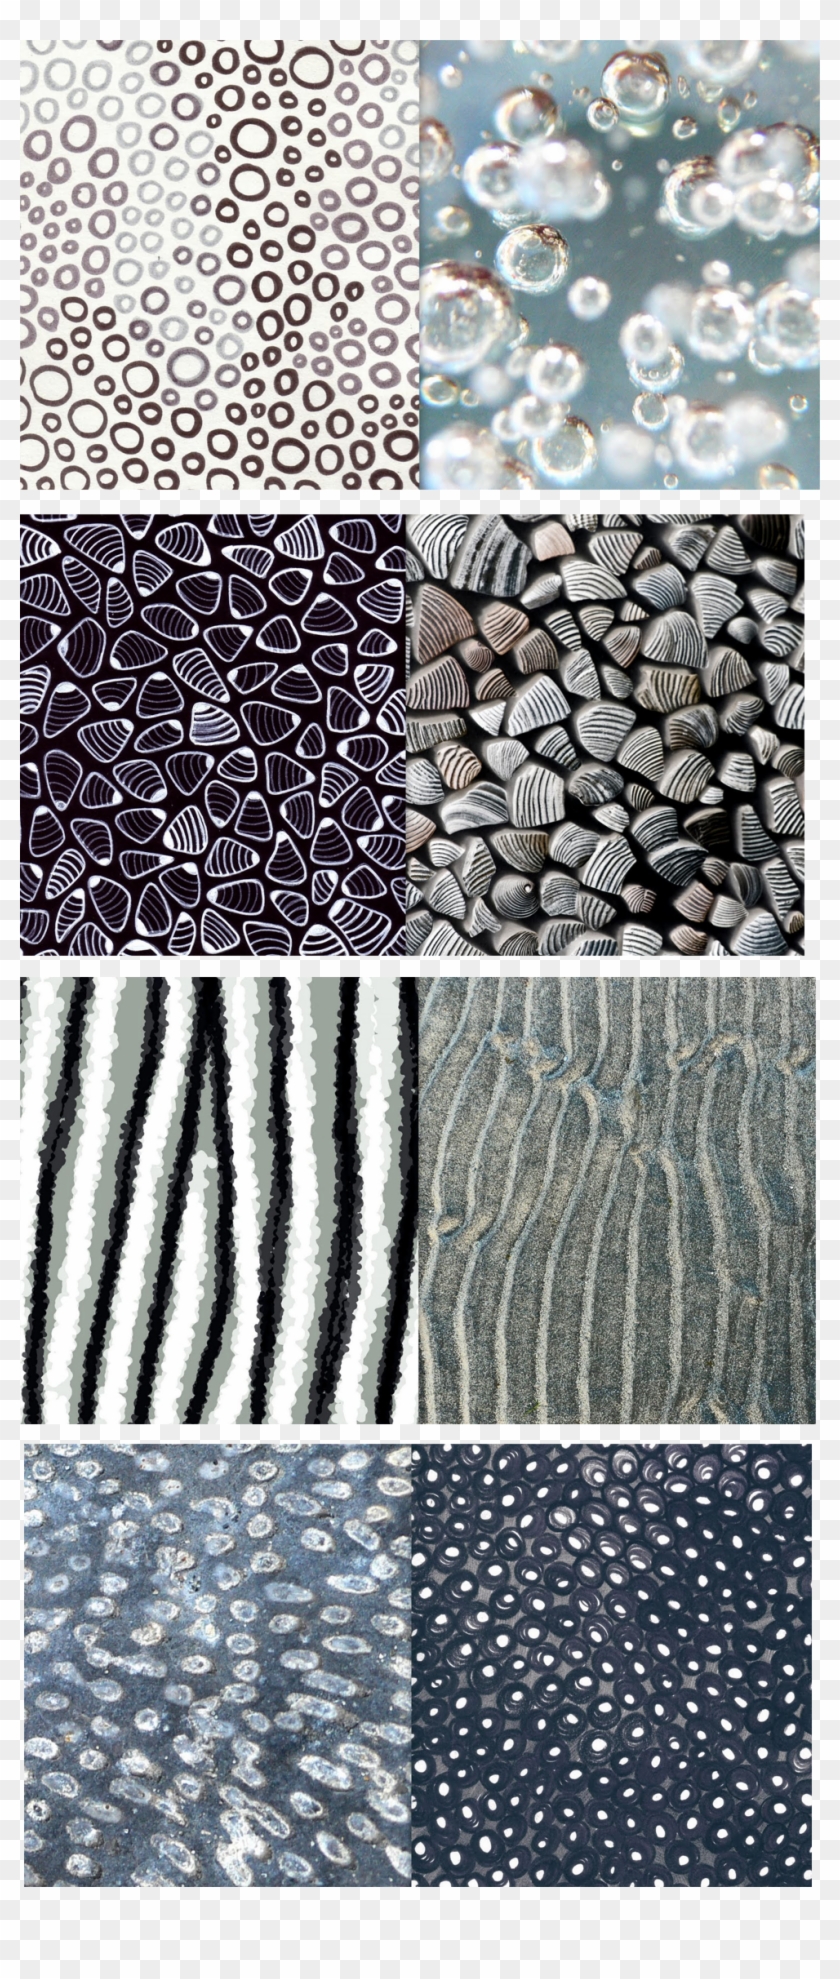 #elena Nuez Patterns In Nature, Textile Patterns, Print - Pebble Clipart #4433792